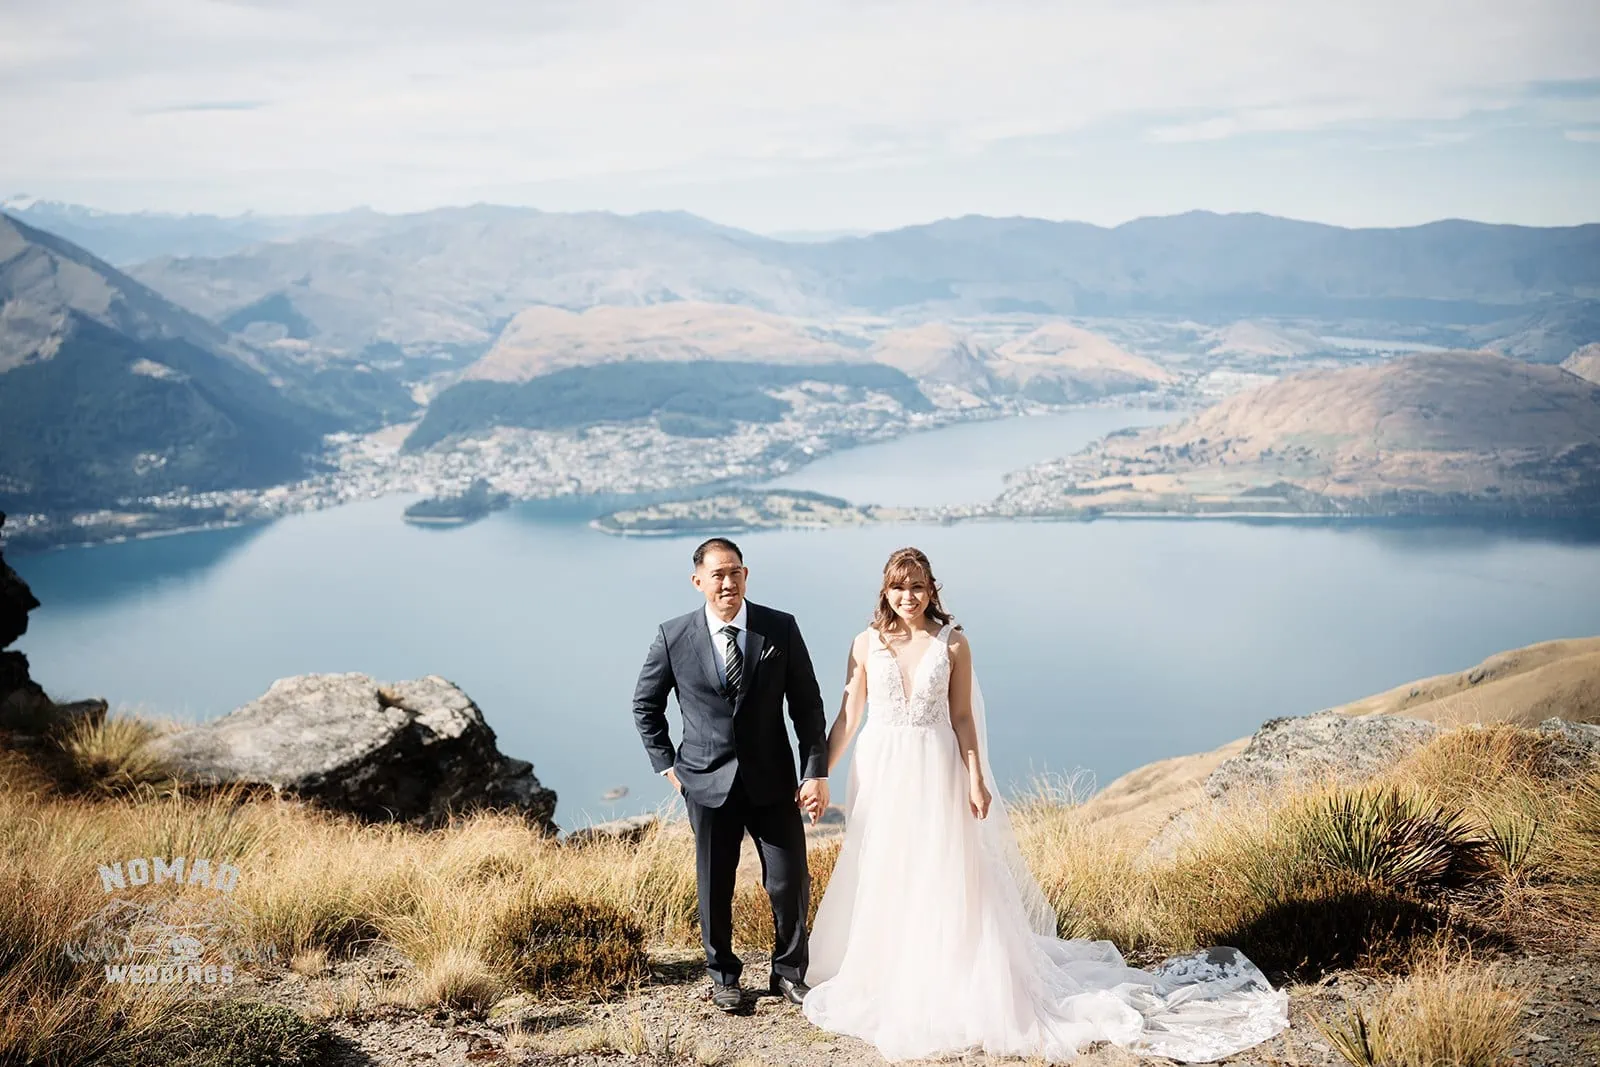 Nhi & Nicholas' Queenstown pre-wedding shoot atop a mountain overlooking Lake Wanaka.